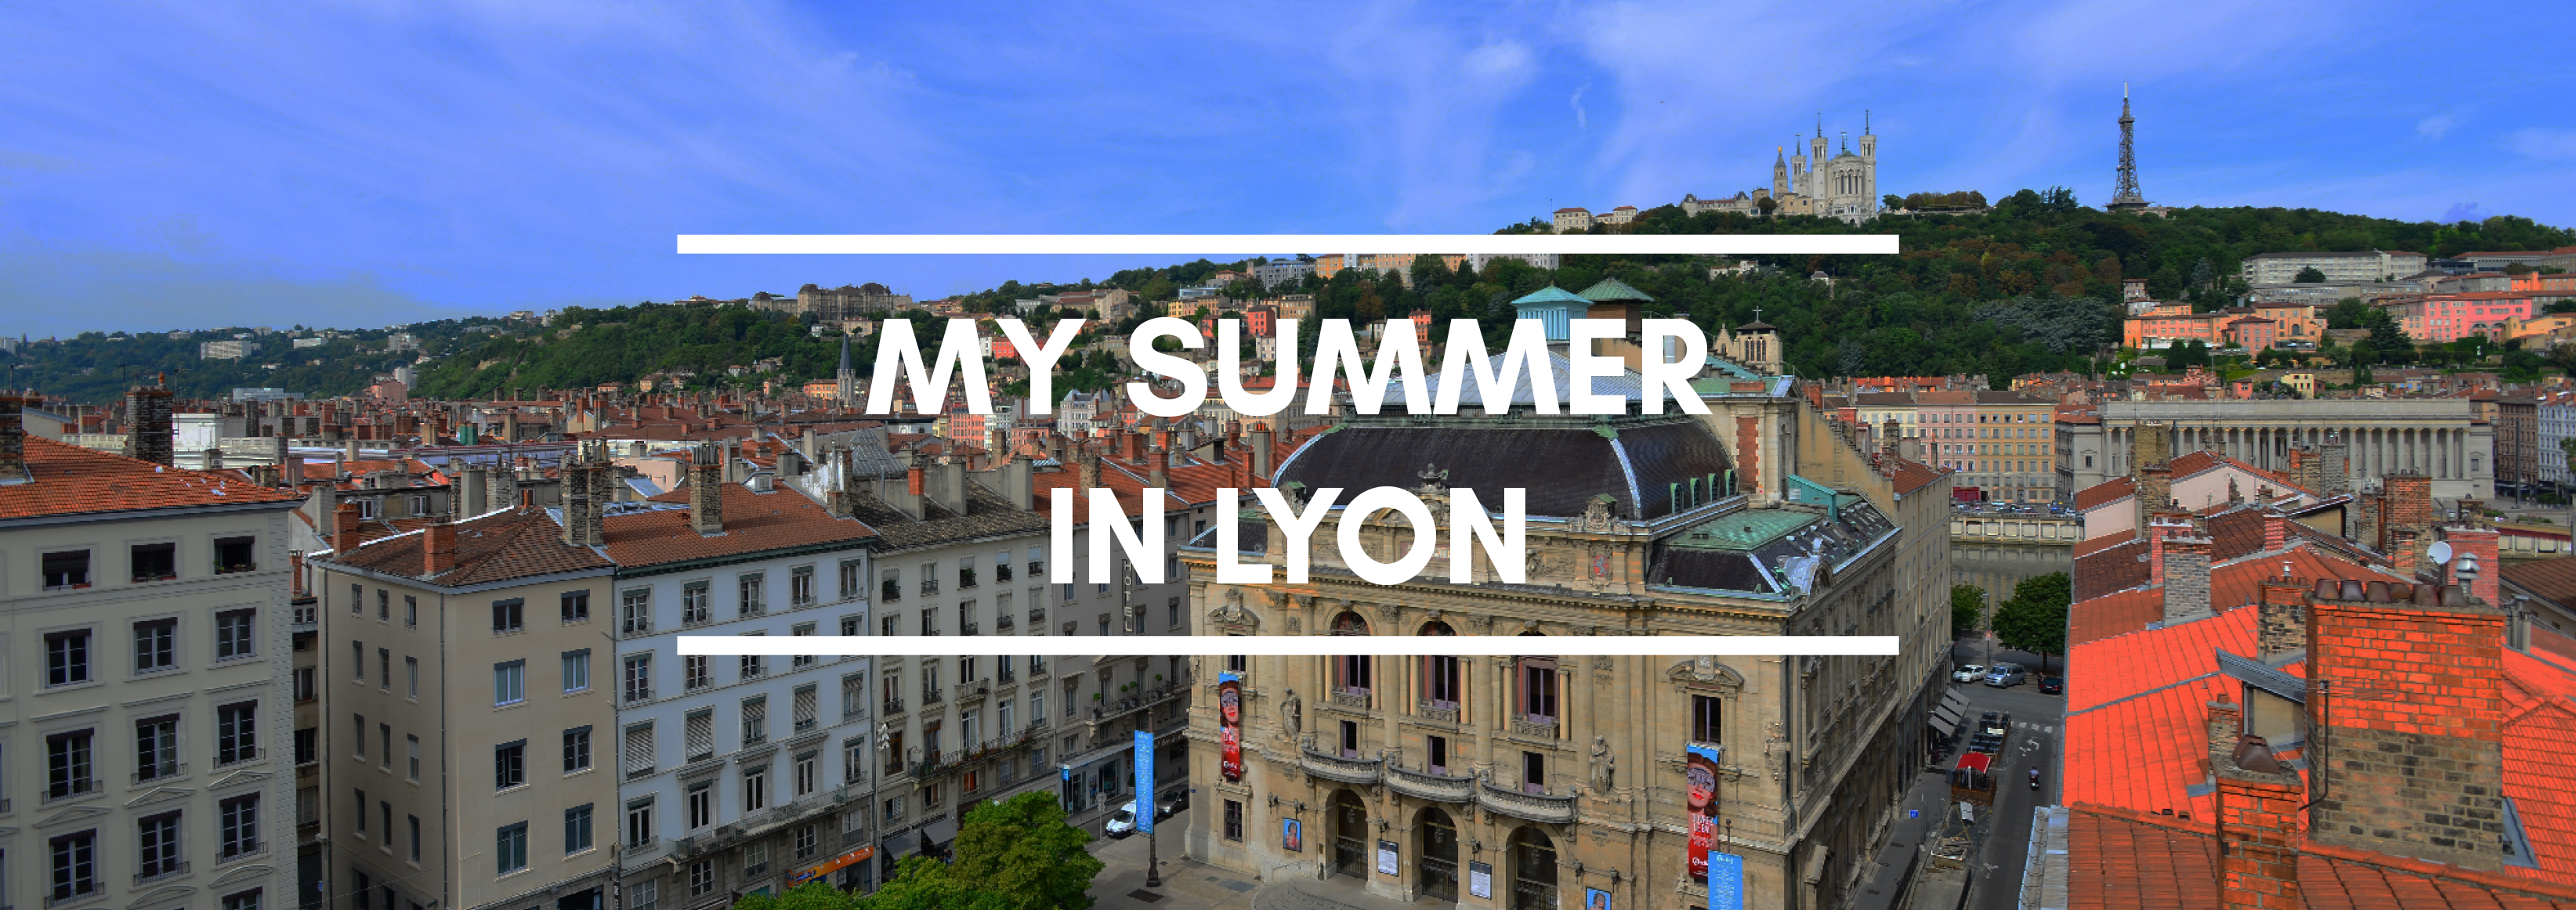 My summer in Lyon